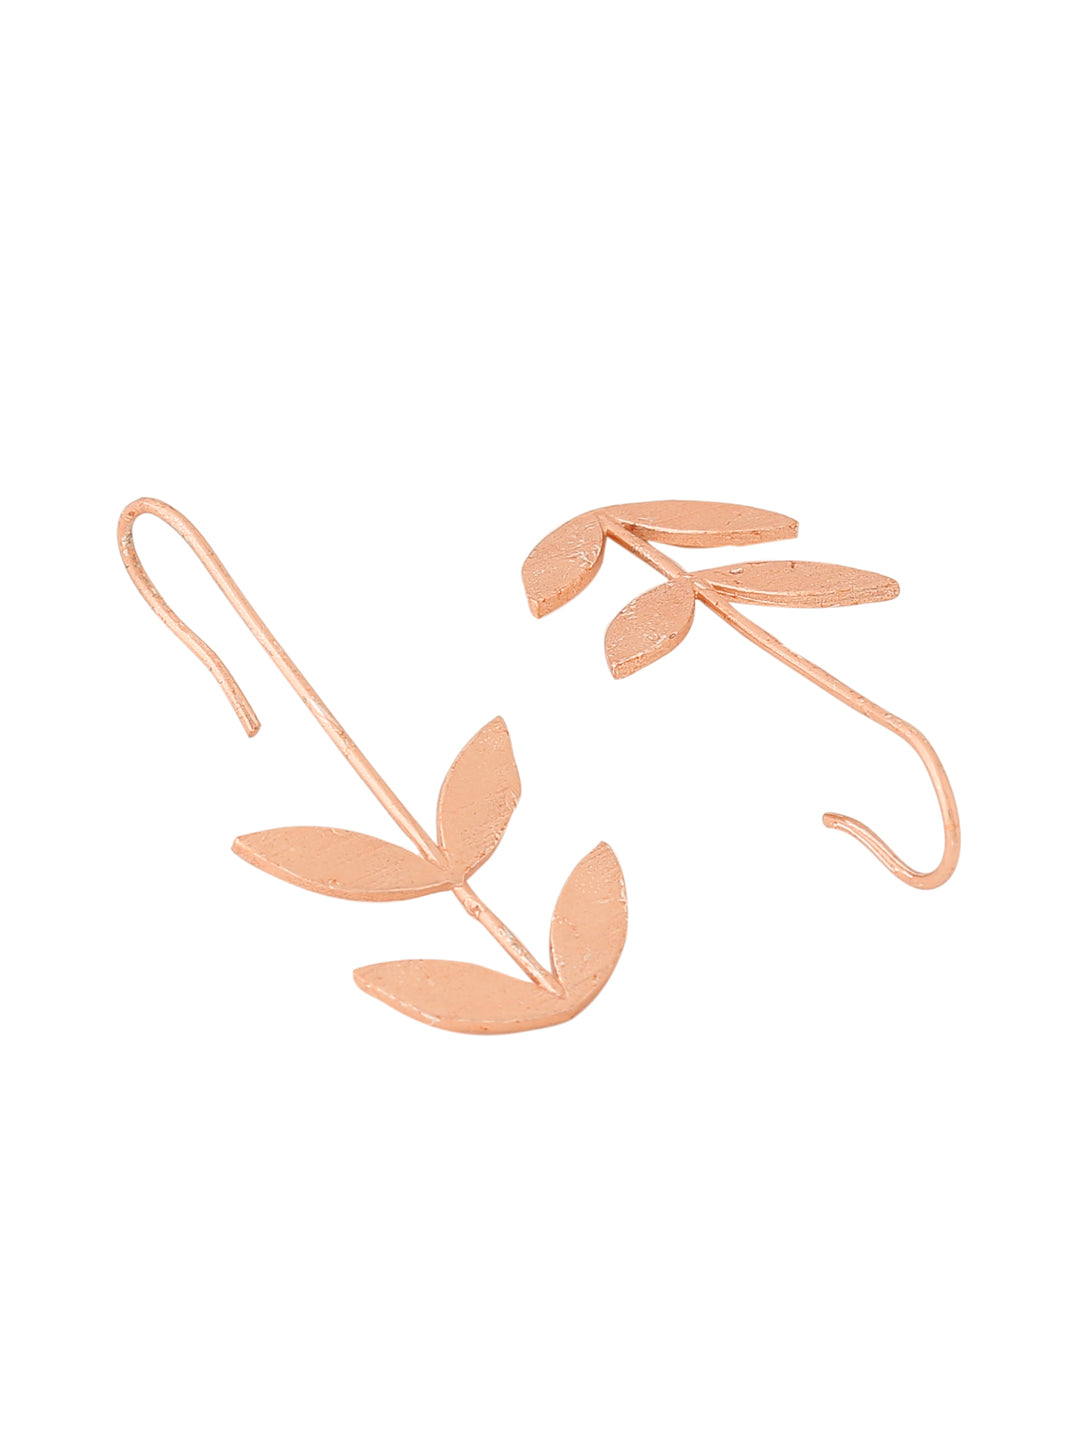 Leaf Earrings - Rose Gold